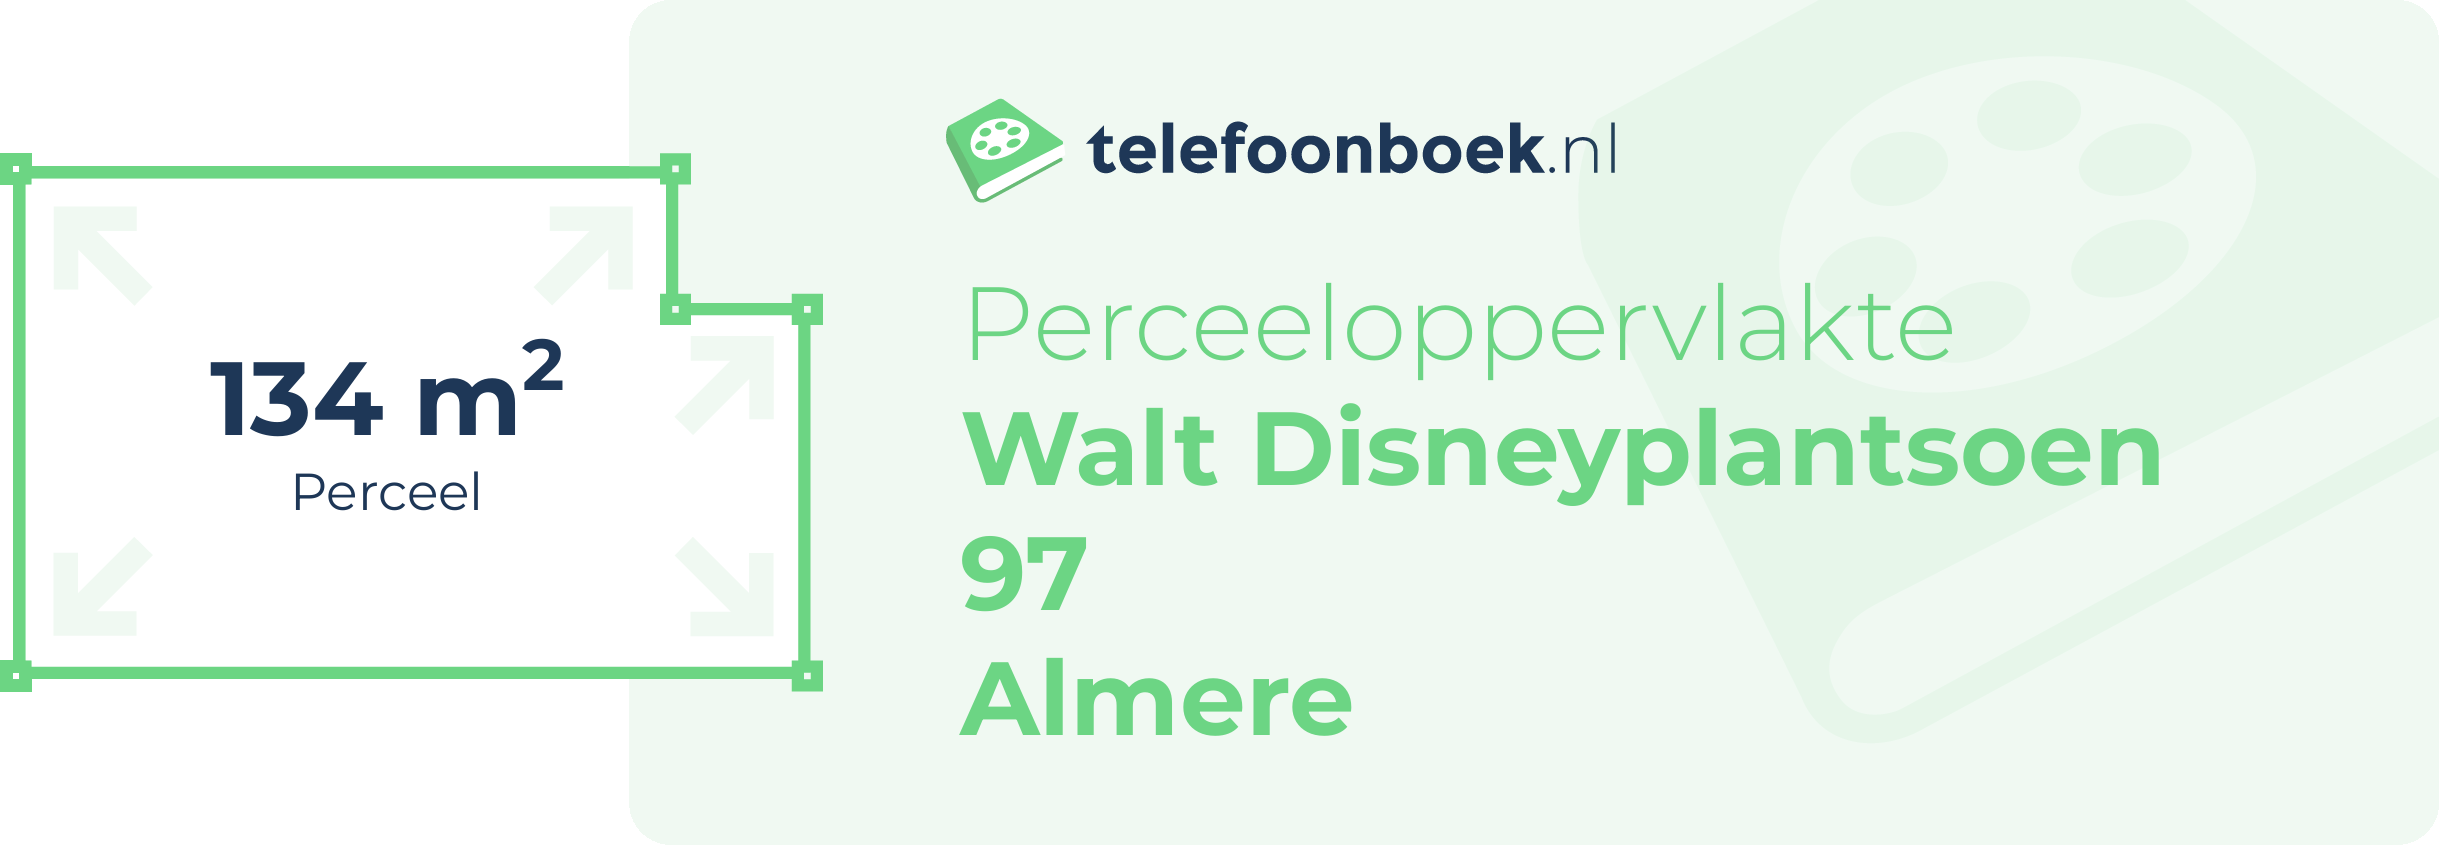 Perceeloppervlakte Walt Disneyplantsoen 97 Almere